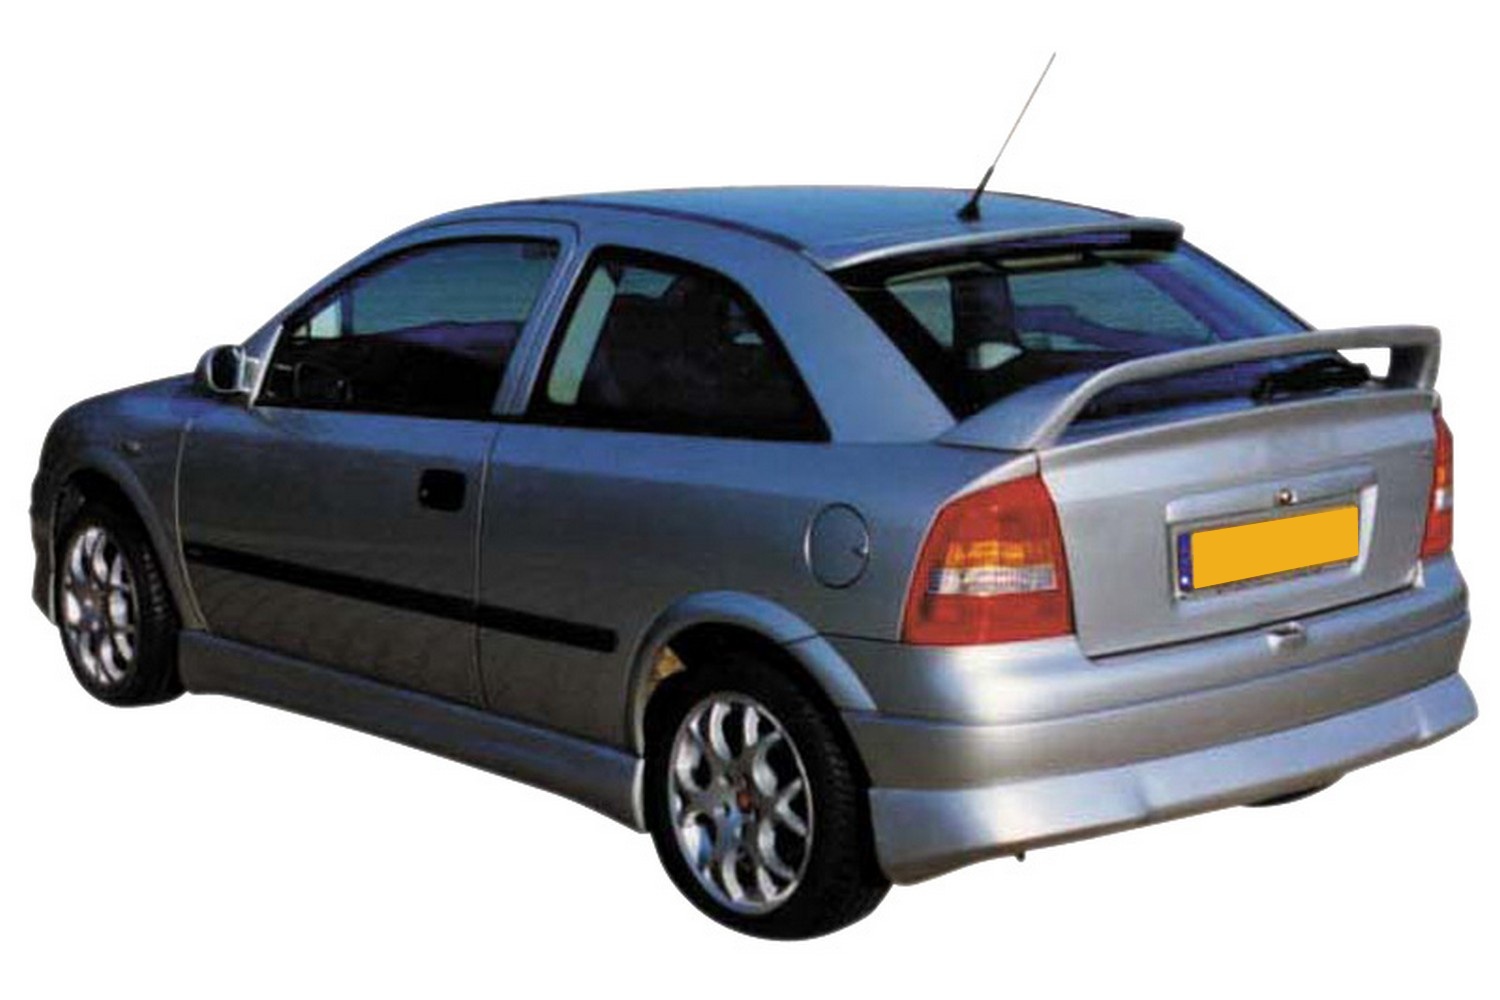 Dachspoiler Heckspoiler Flügel Heckflügel für Opel Astra G 1998-2004 G